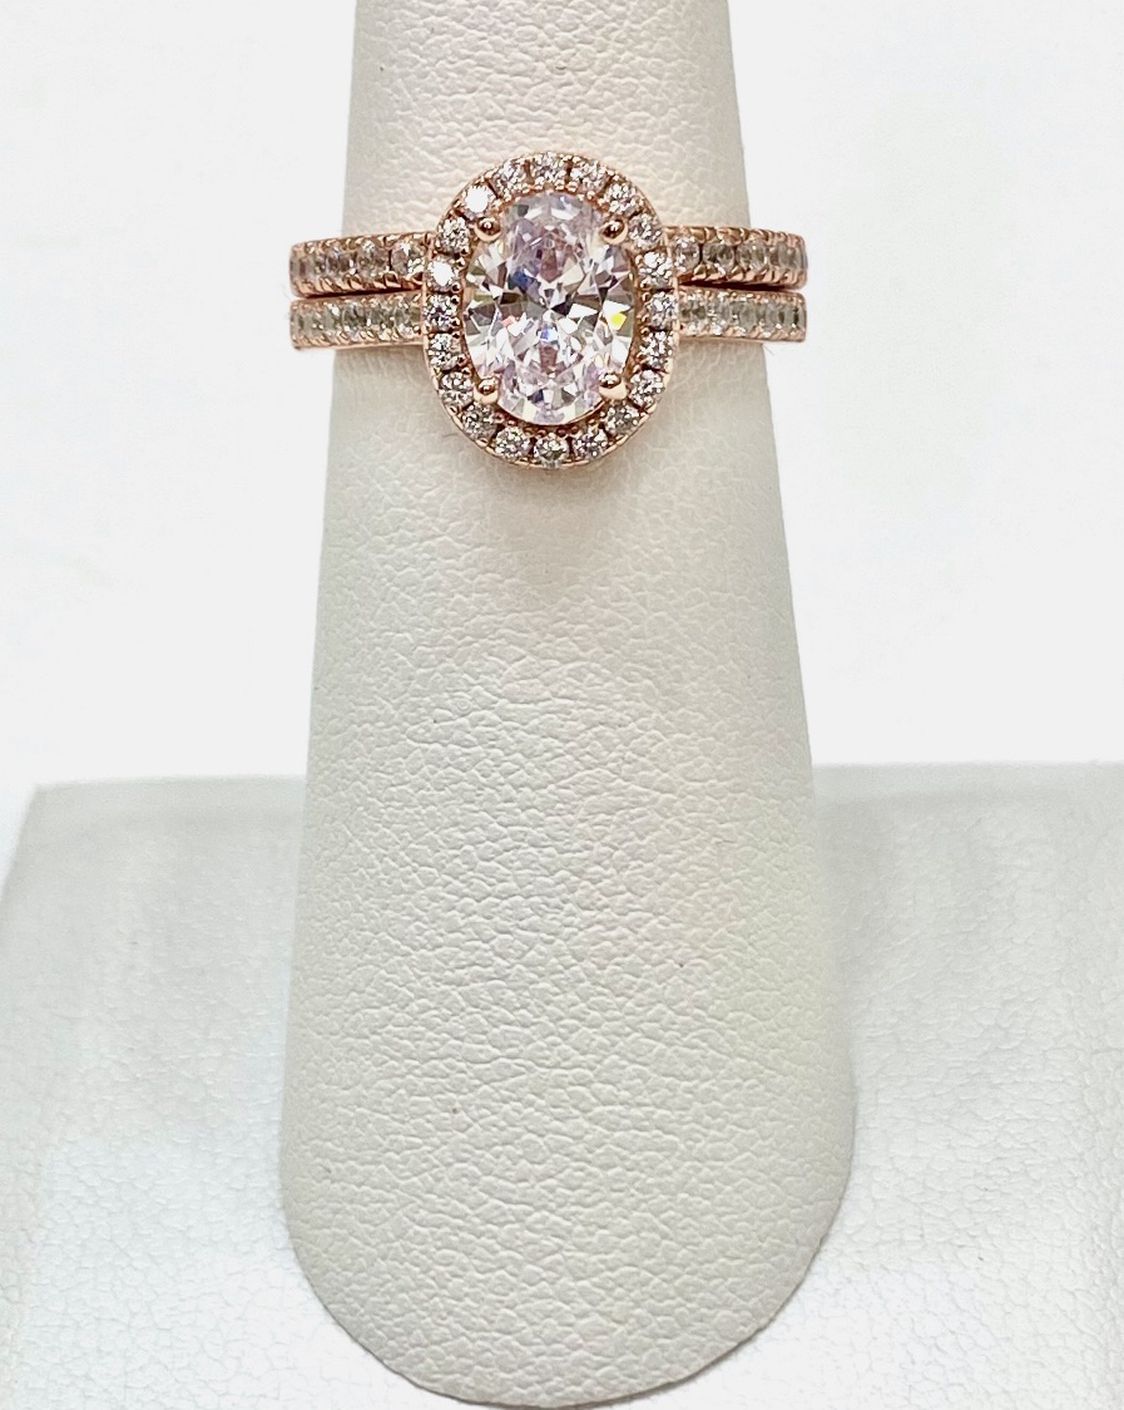 NEW! 1.25CT Rose Gold, Stunning Lab Created Moissanite Gemstone Bridal Set, Please See Full Details